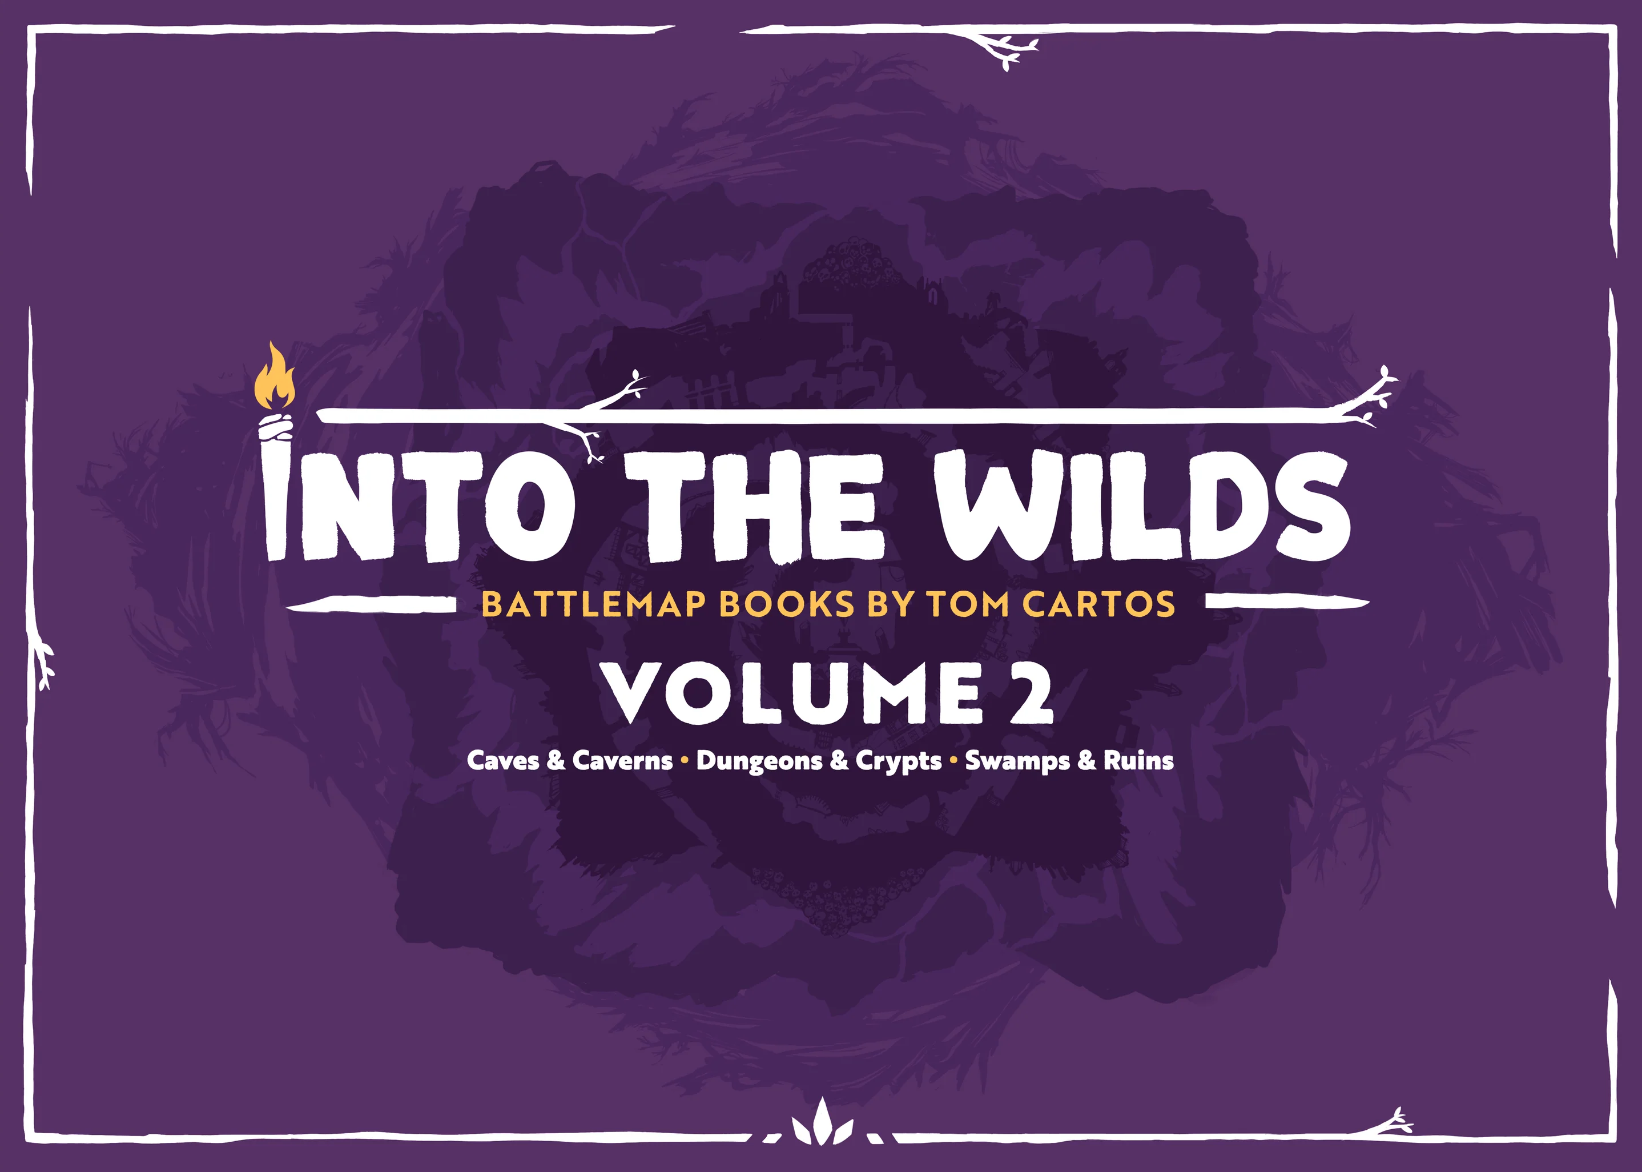 Into the Wilds Battlemap Books: Volume 2 